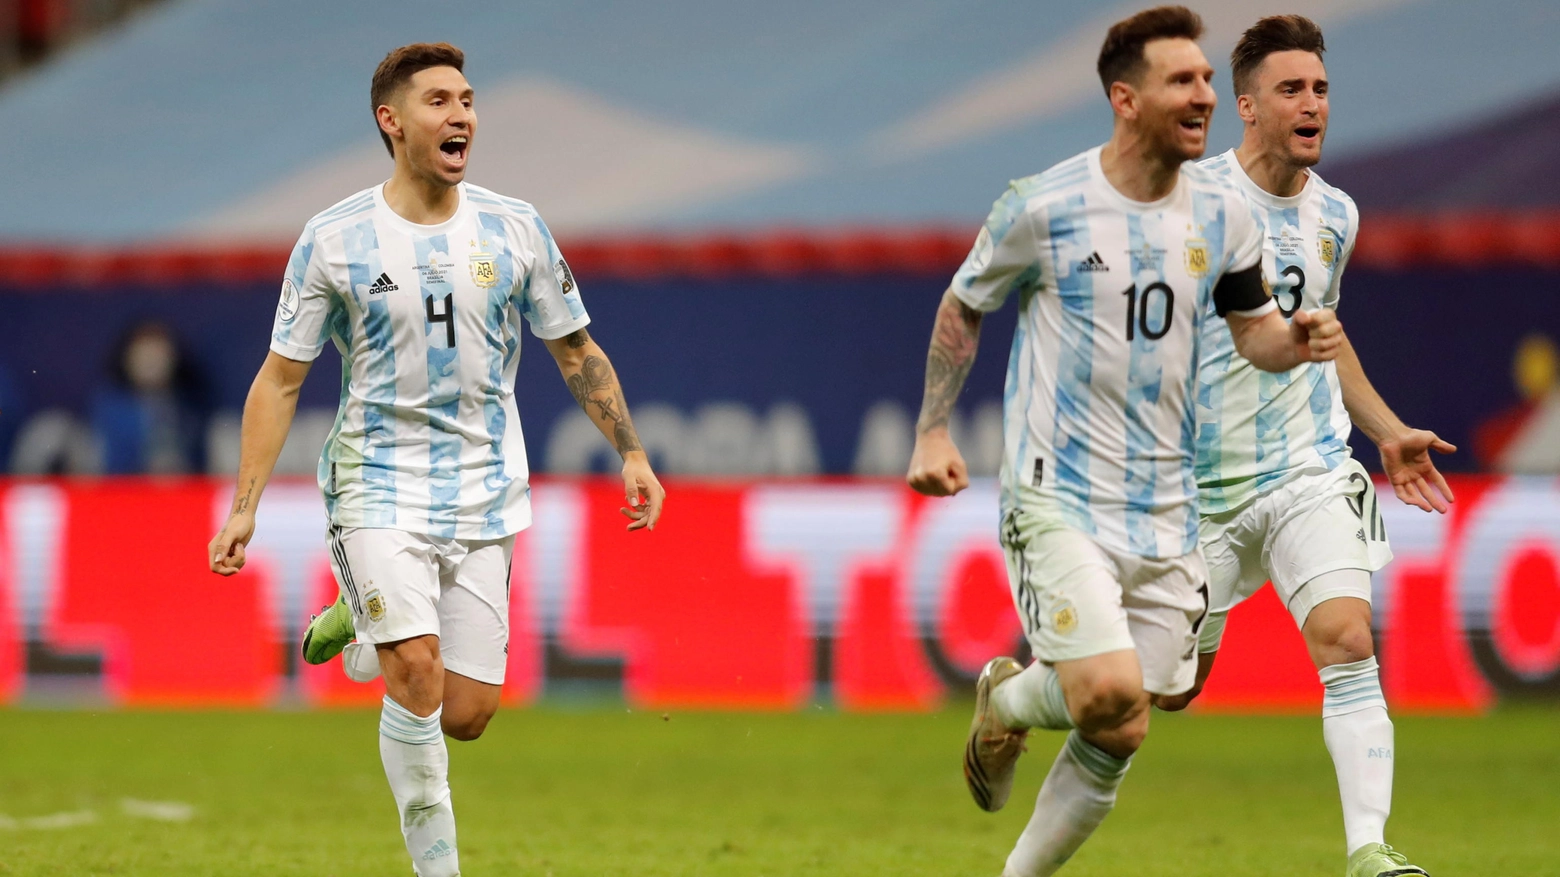 L'Argentina è campione della Copa América